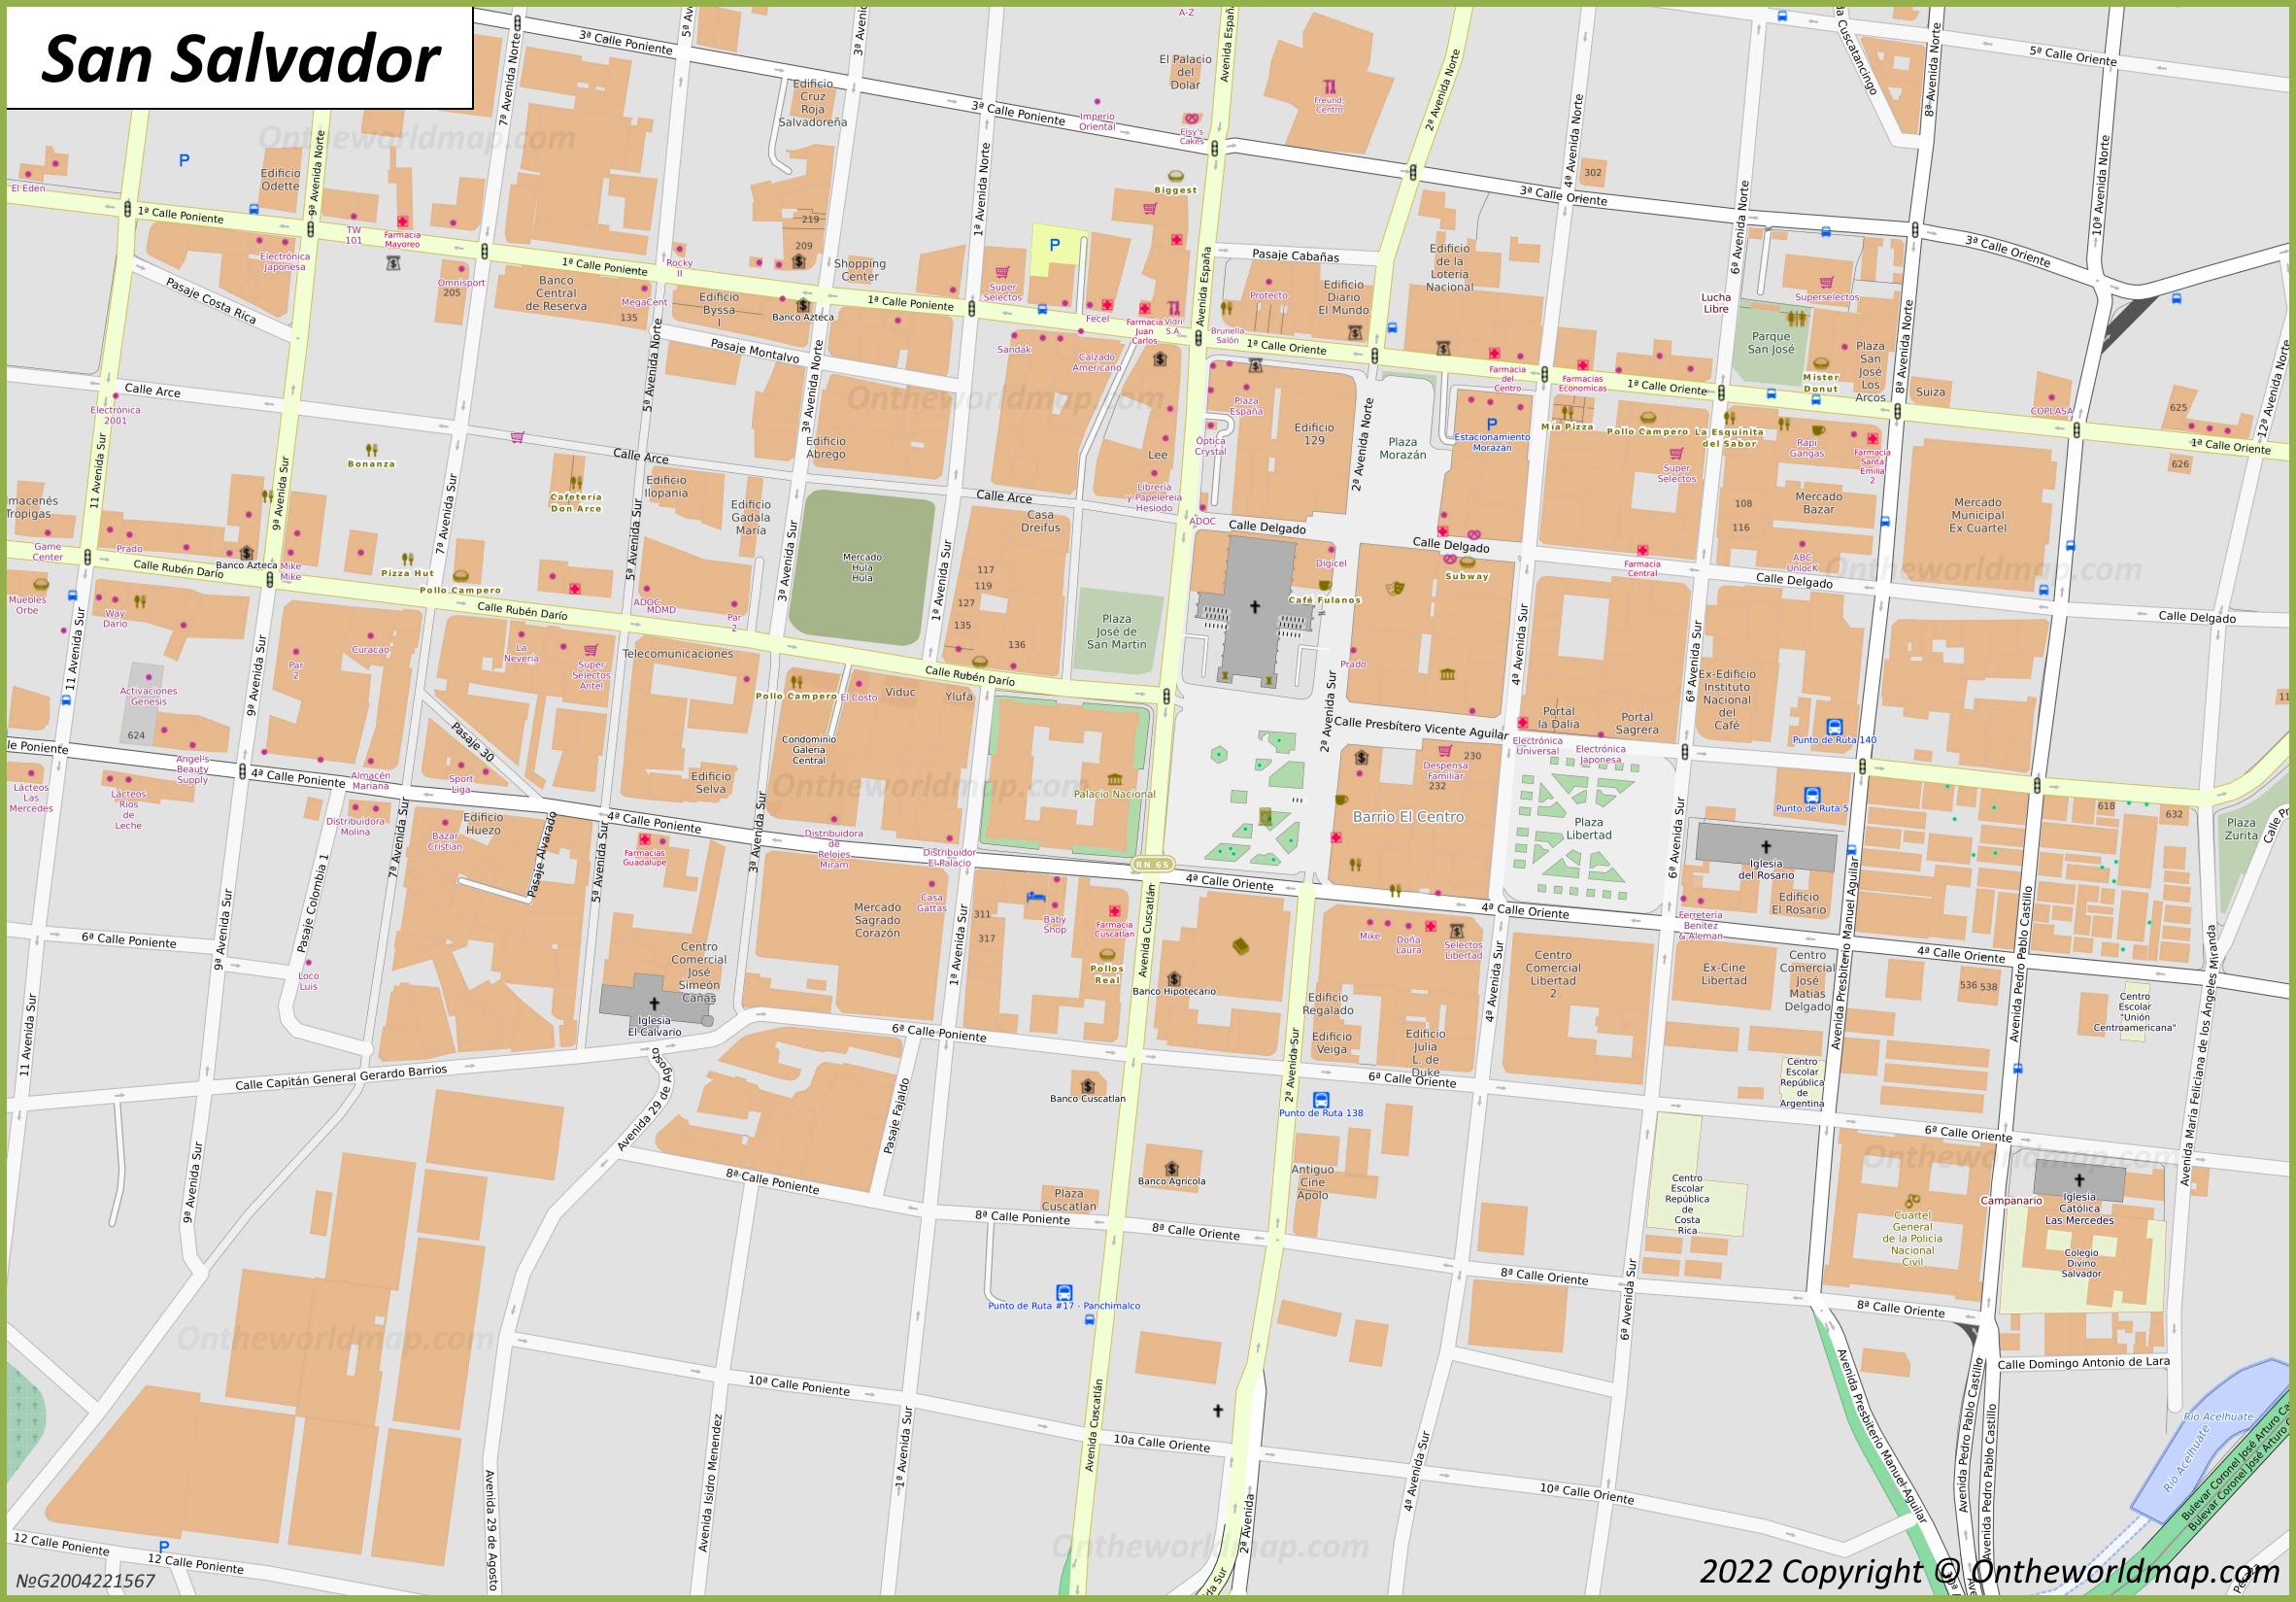 San Salvador City Centre Map